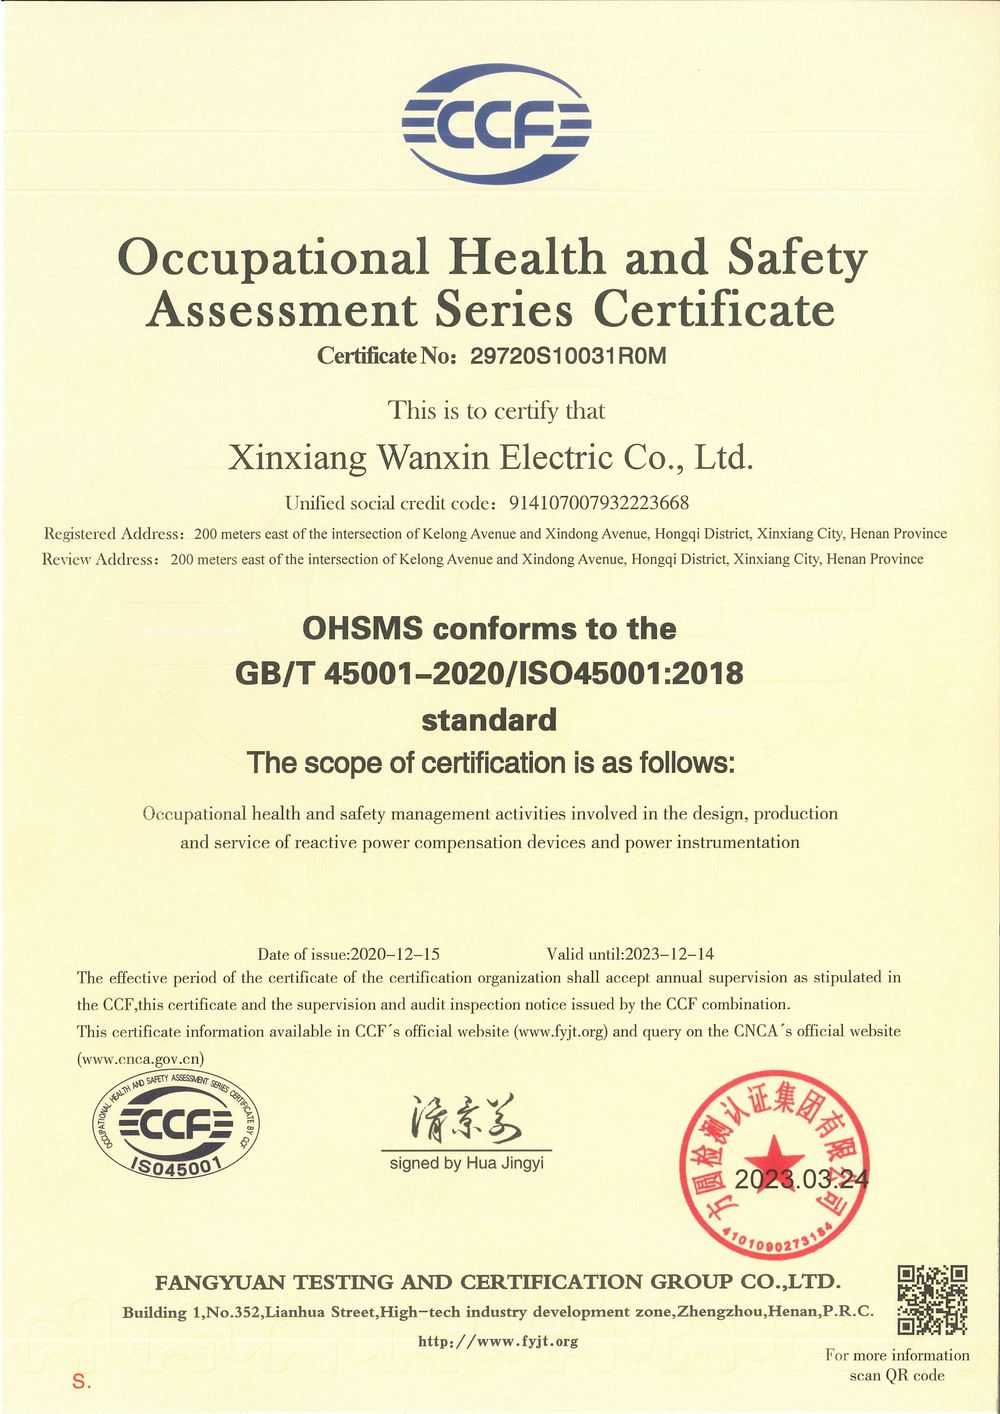 GBT45001職業健康安全管理體系英文證書